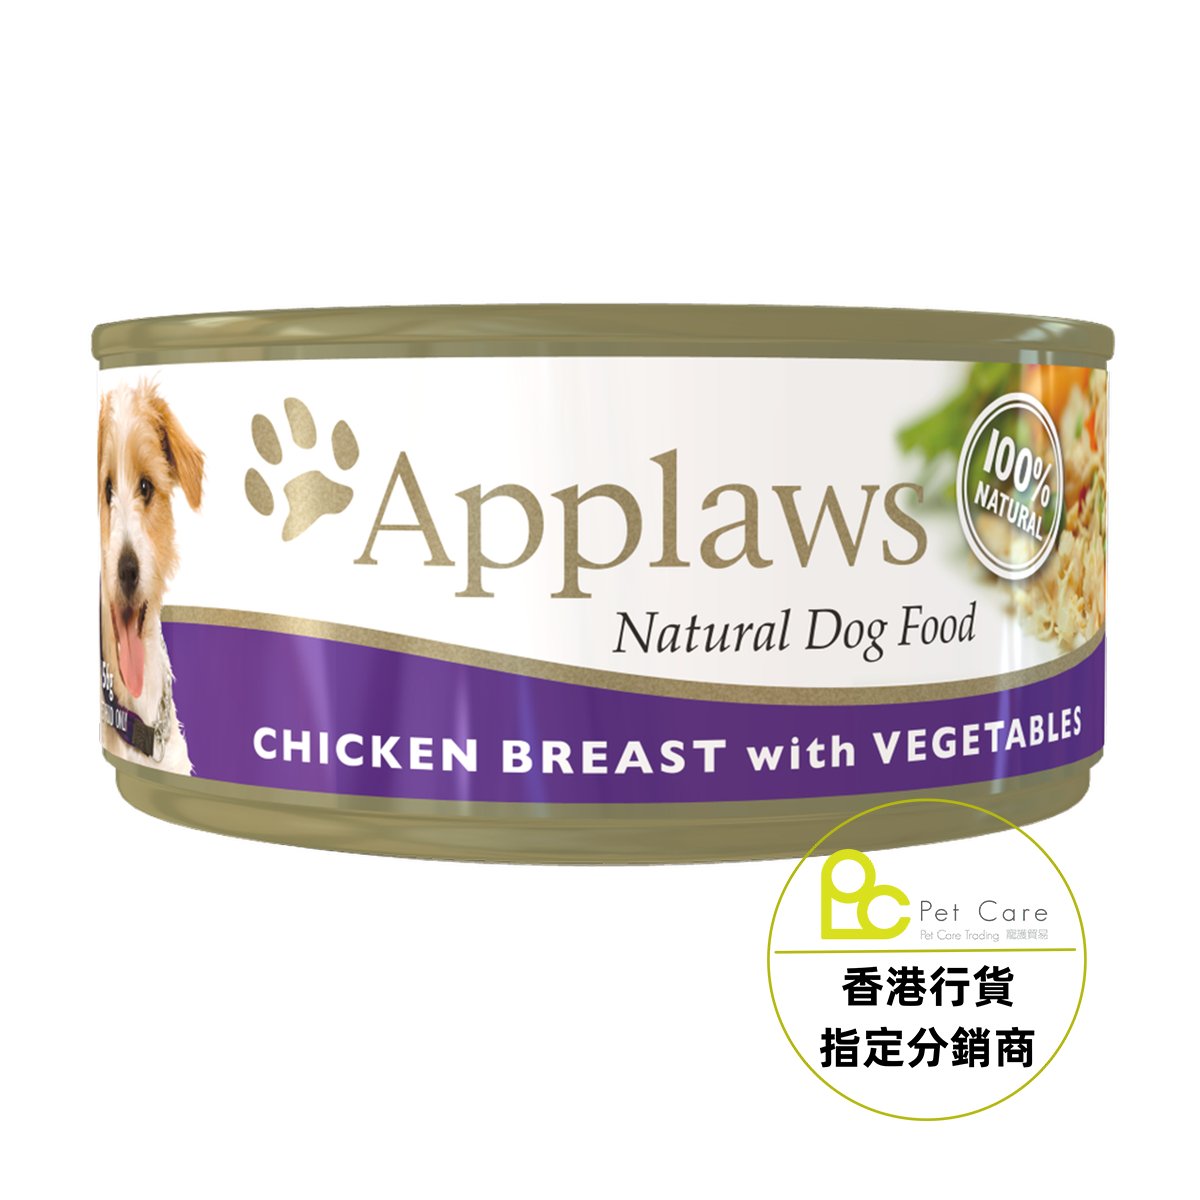 Applaws Dog 全天然 狗罐頭 - 雞胸 蔬菜 156g